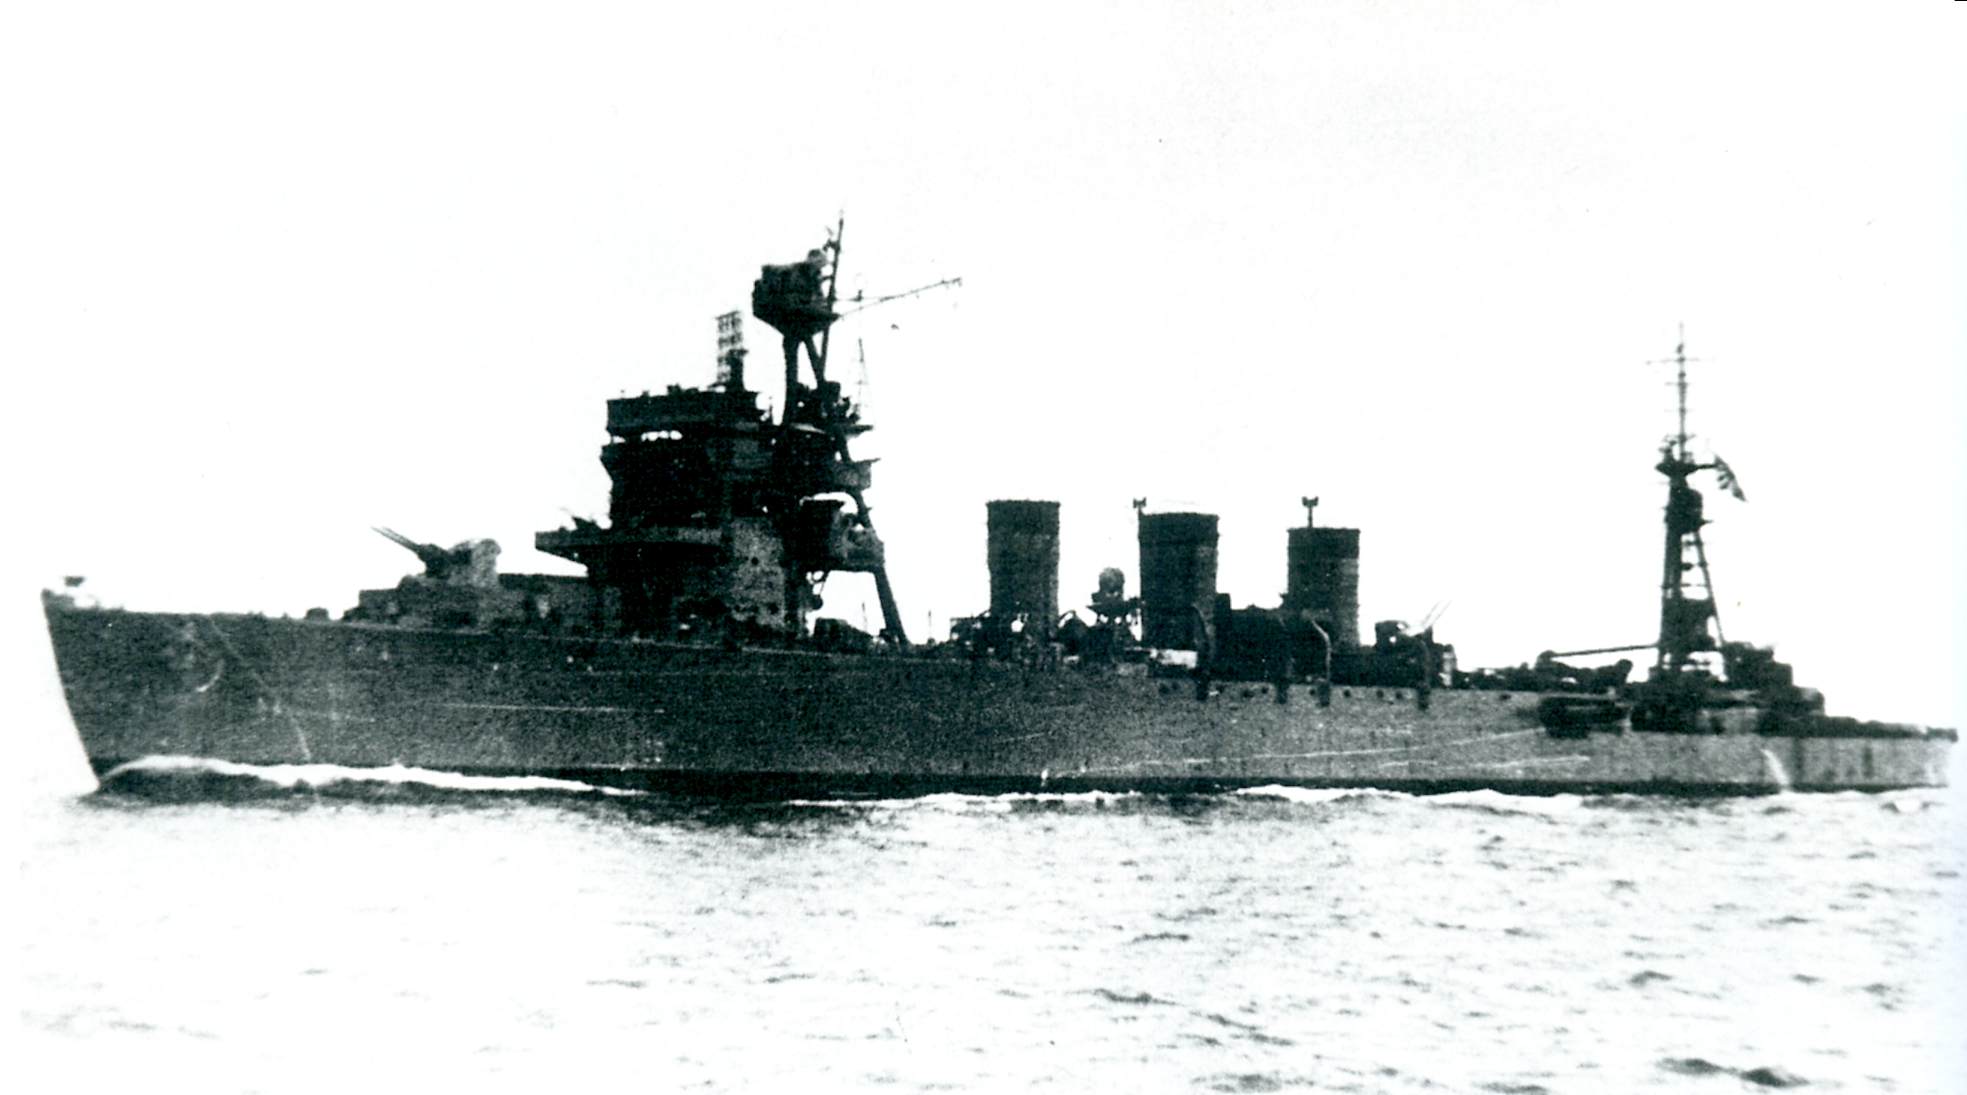 Light cruiser Isuzu immediately after modification in Tokyo Bay off Yokohama, Japan, 1944